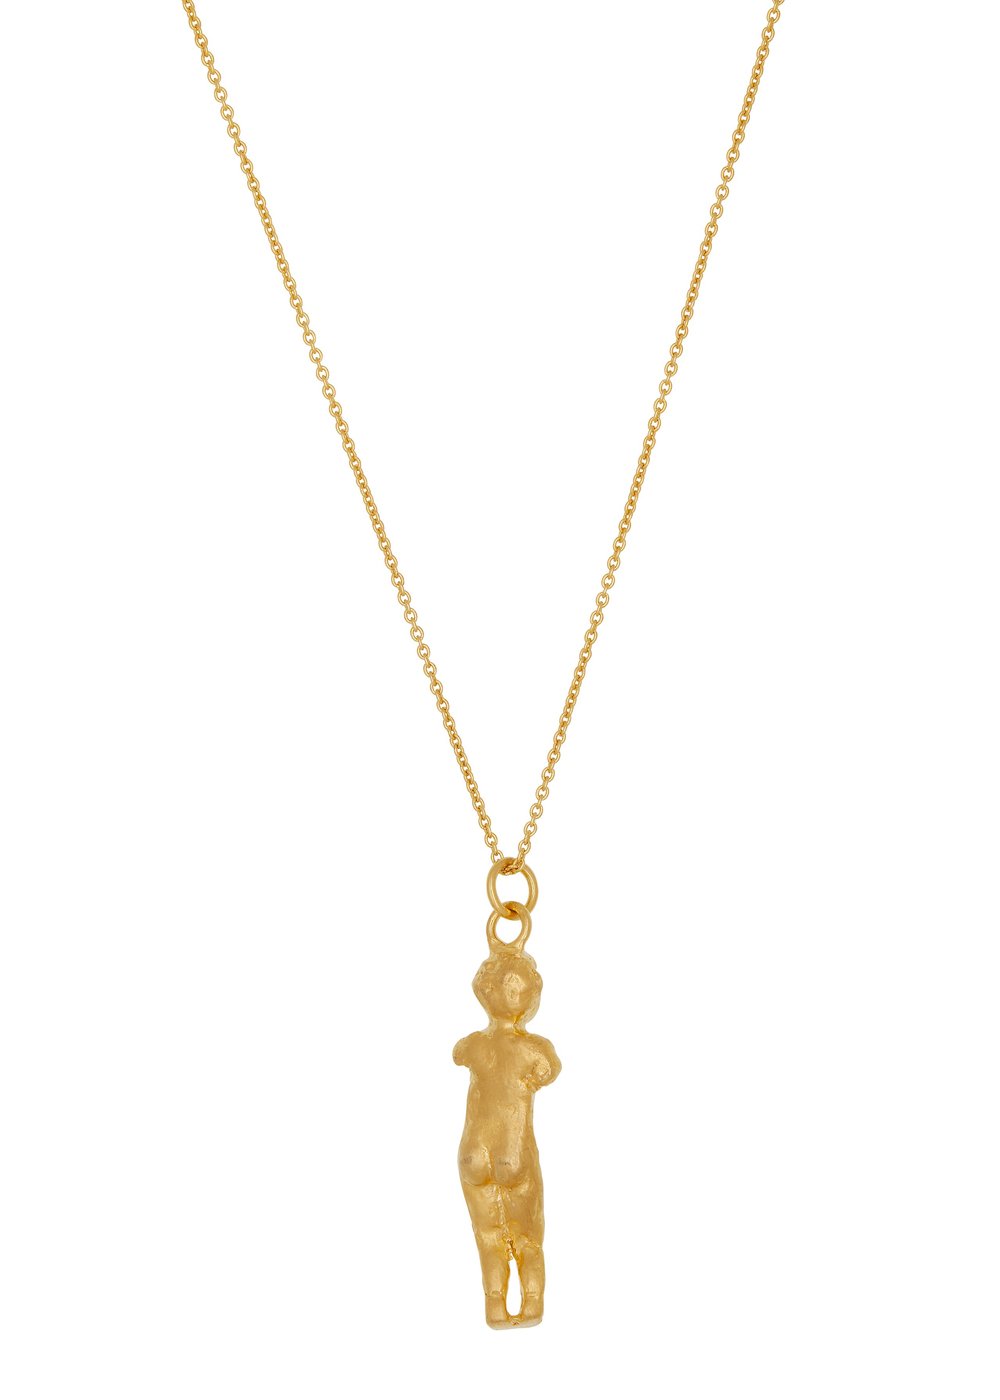 MONDO MONDO Classic Man necklace in gold. Available at EASE Toronto.